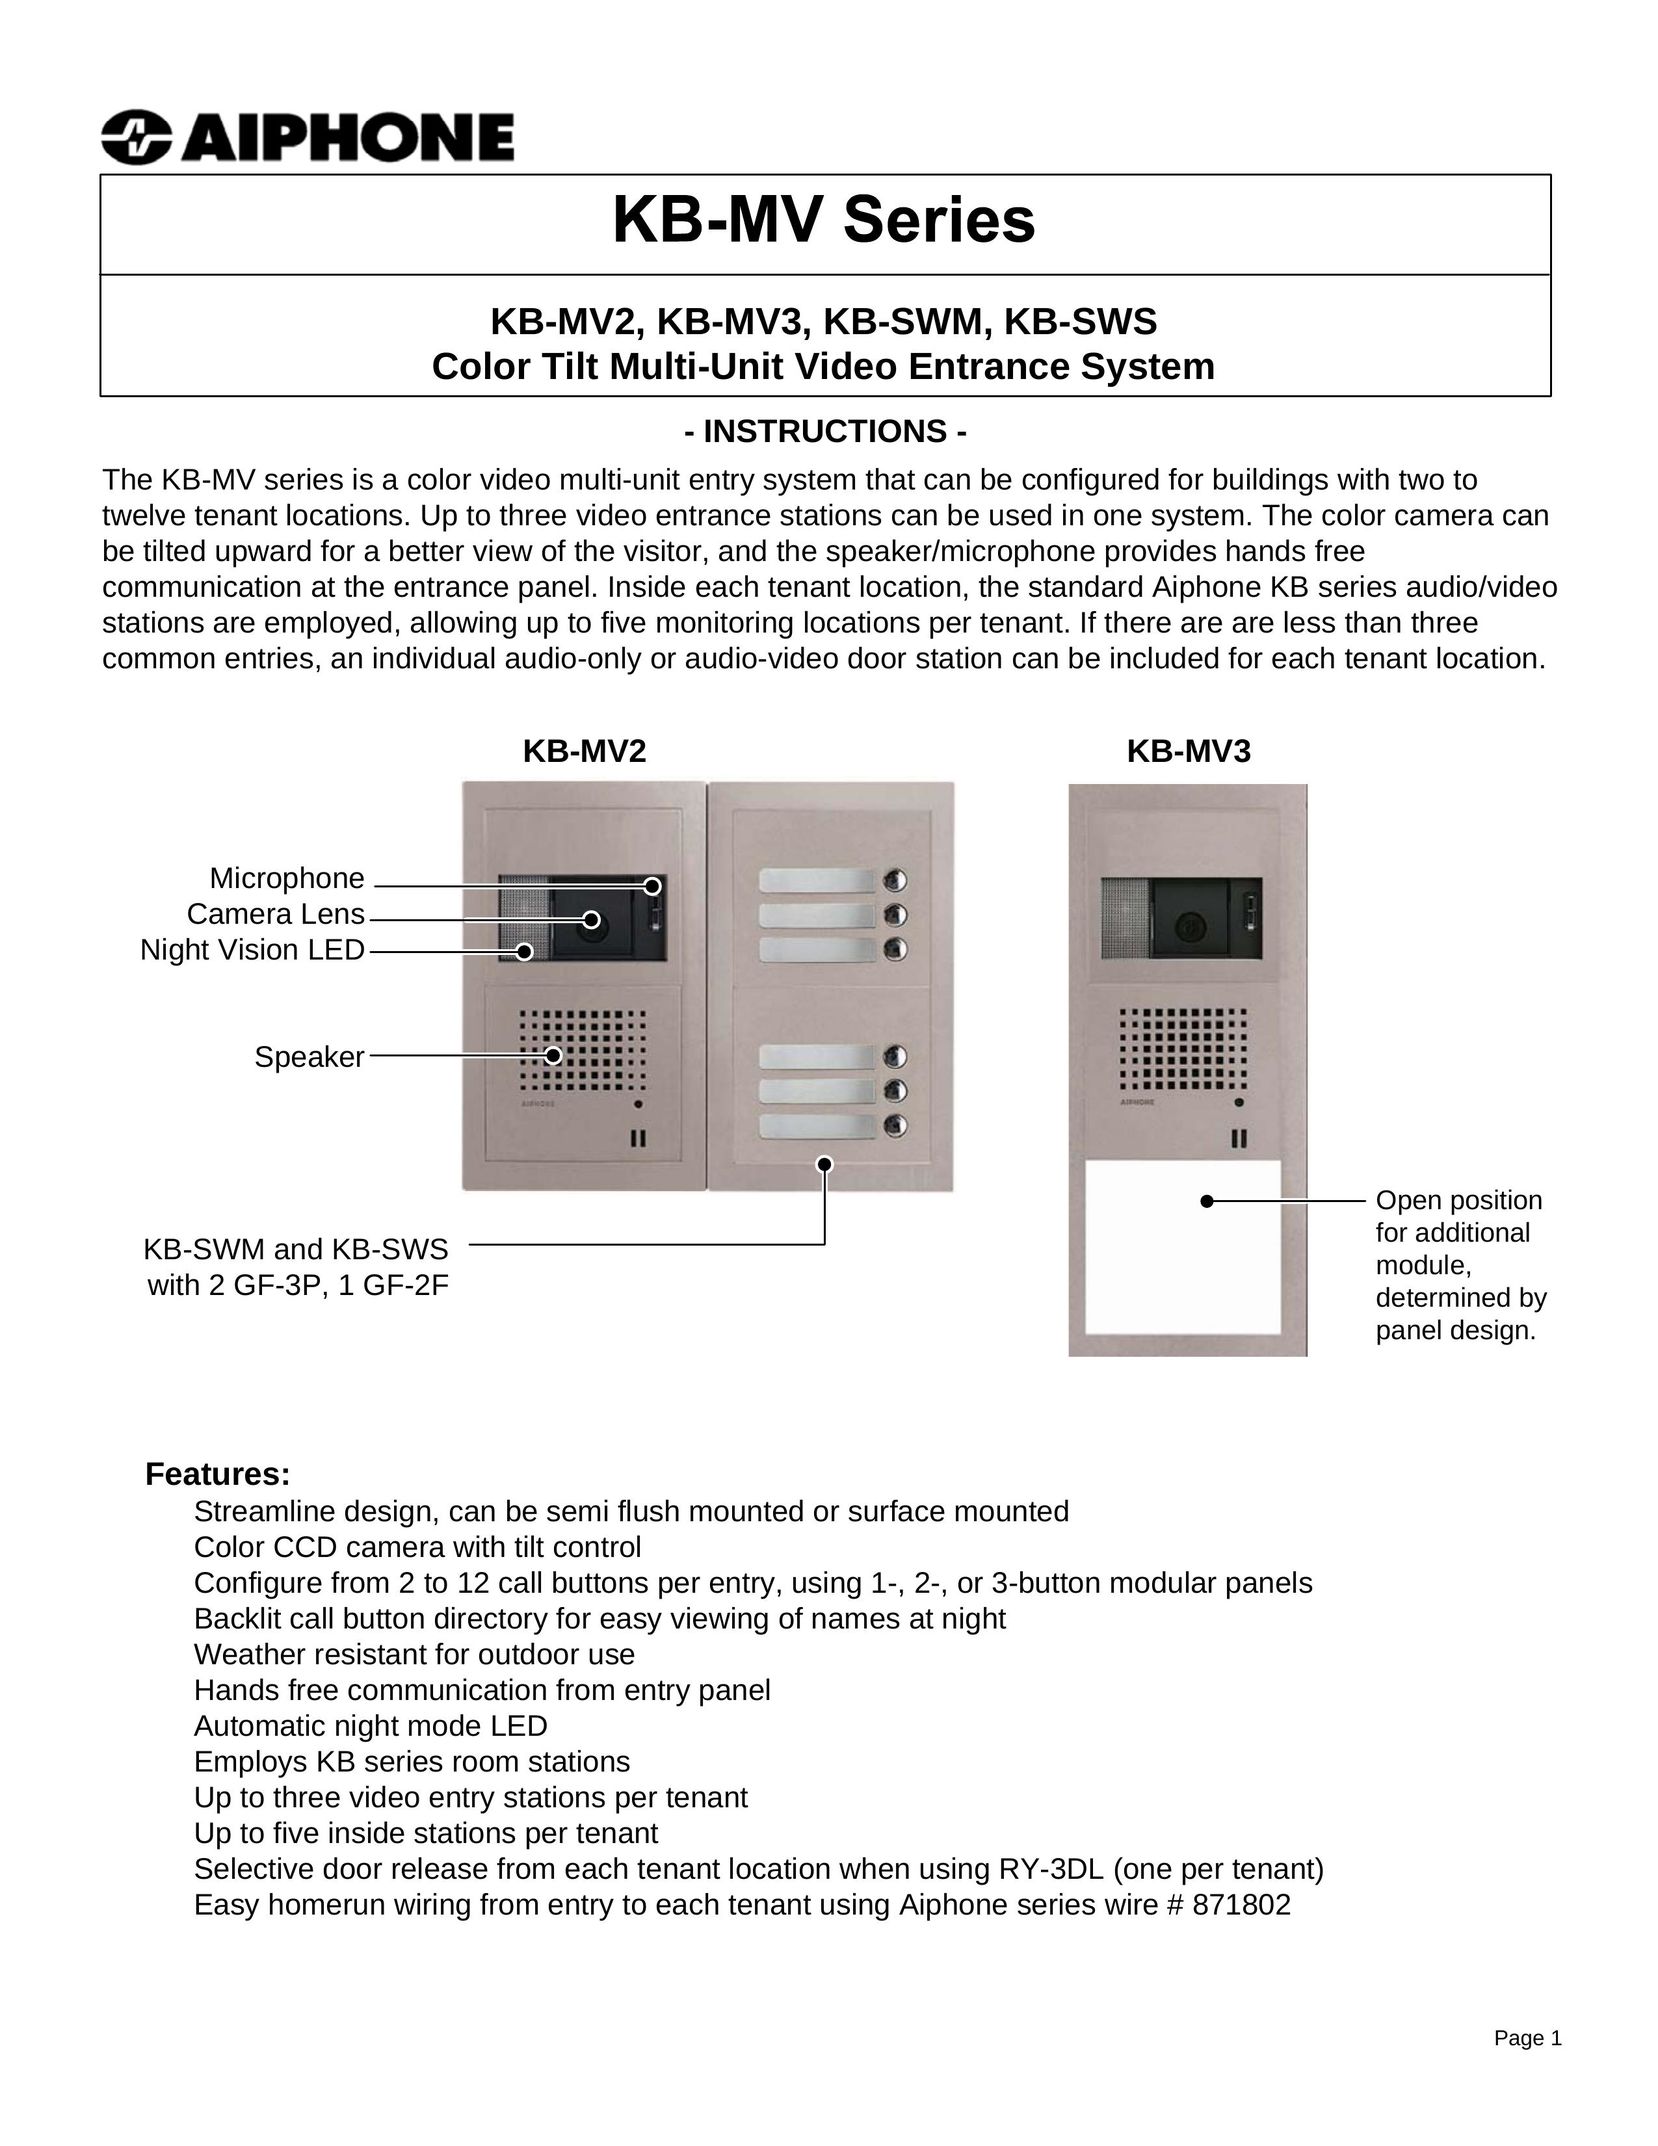 Aiphone KB-MV3 Car Video System User Manual